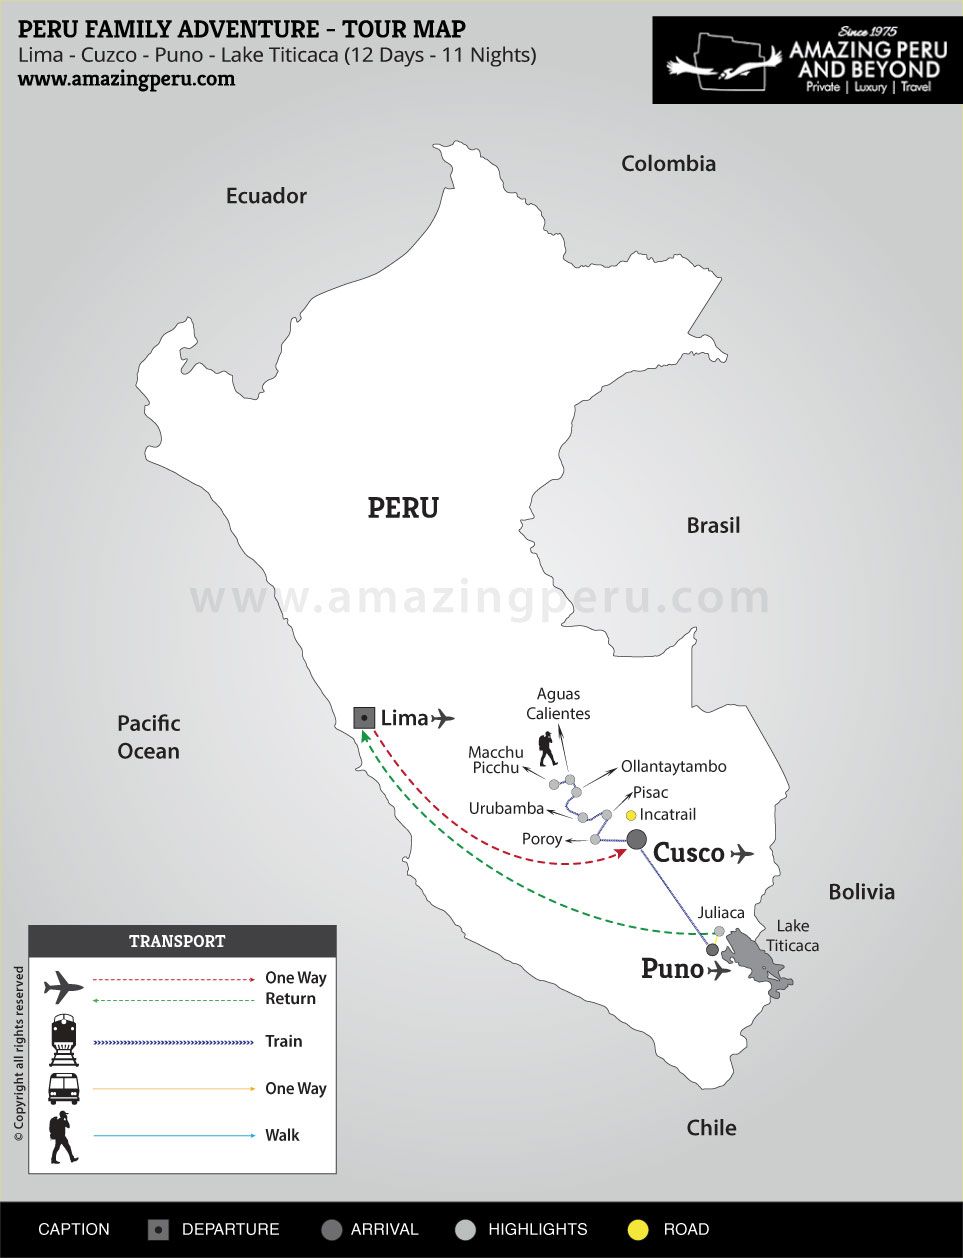 Peru Family Adventure Tour - 12 days / 11 nights.